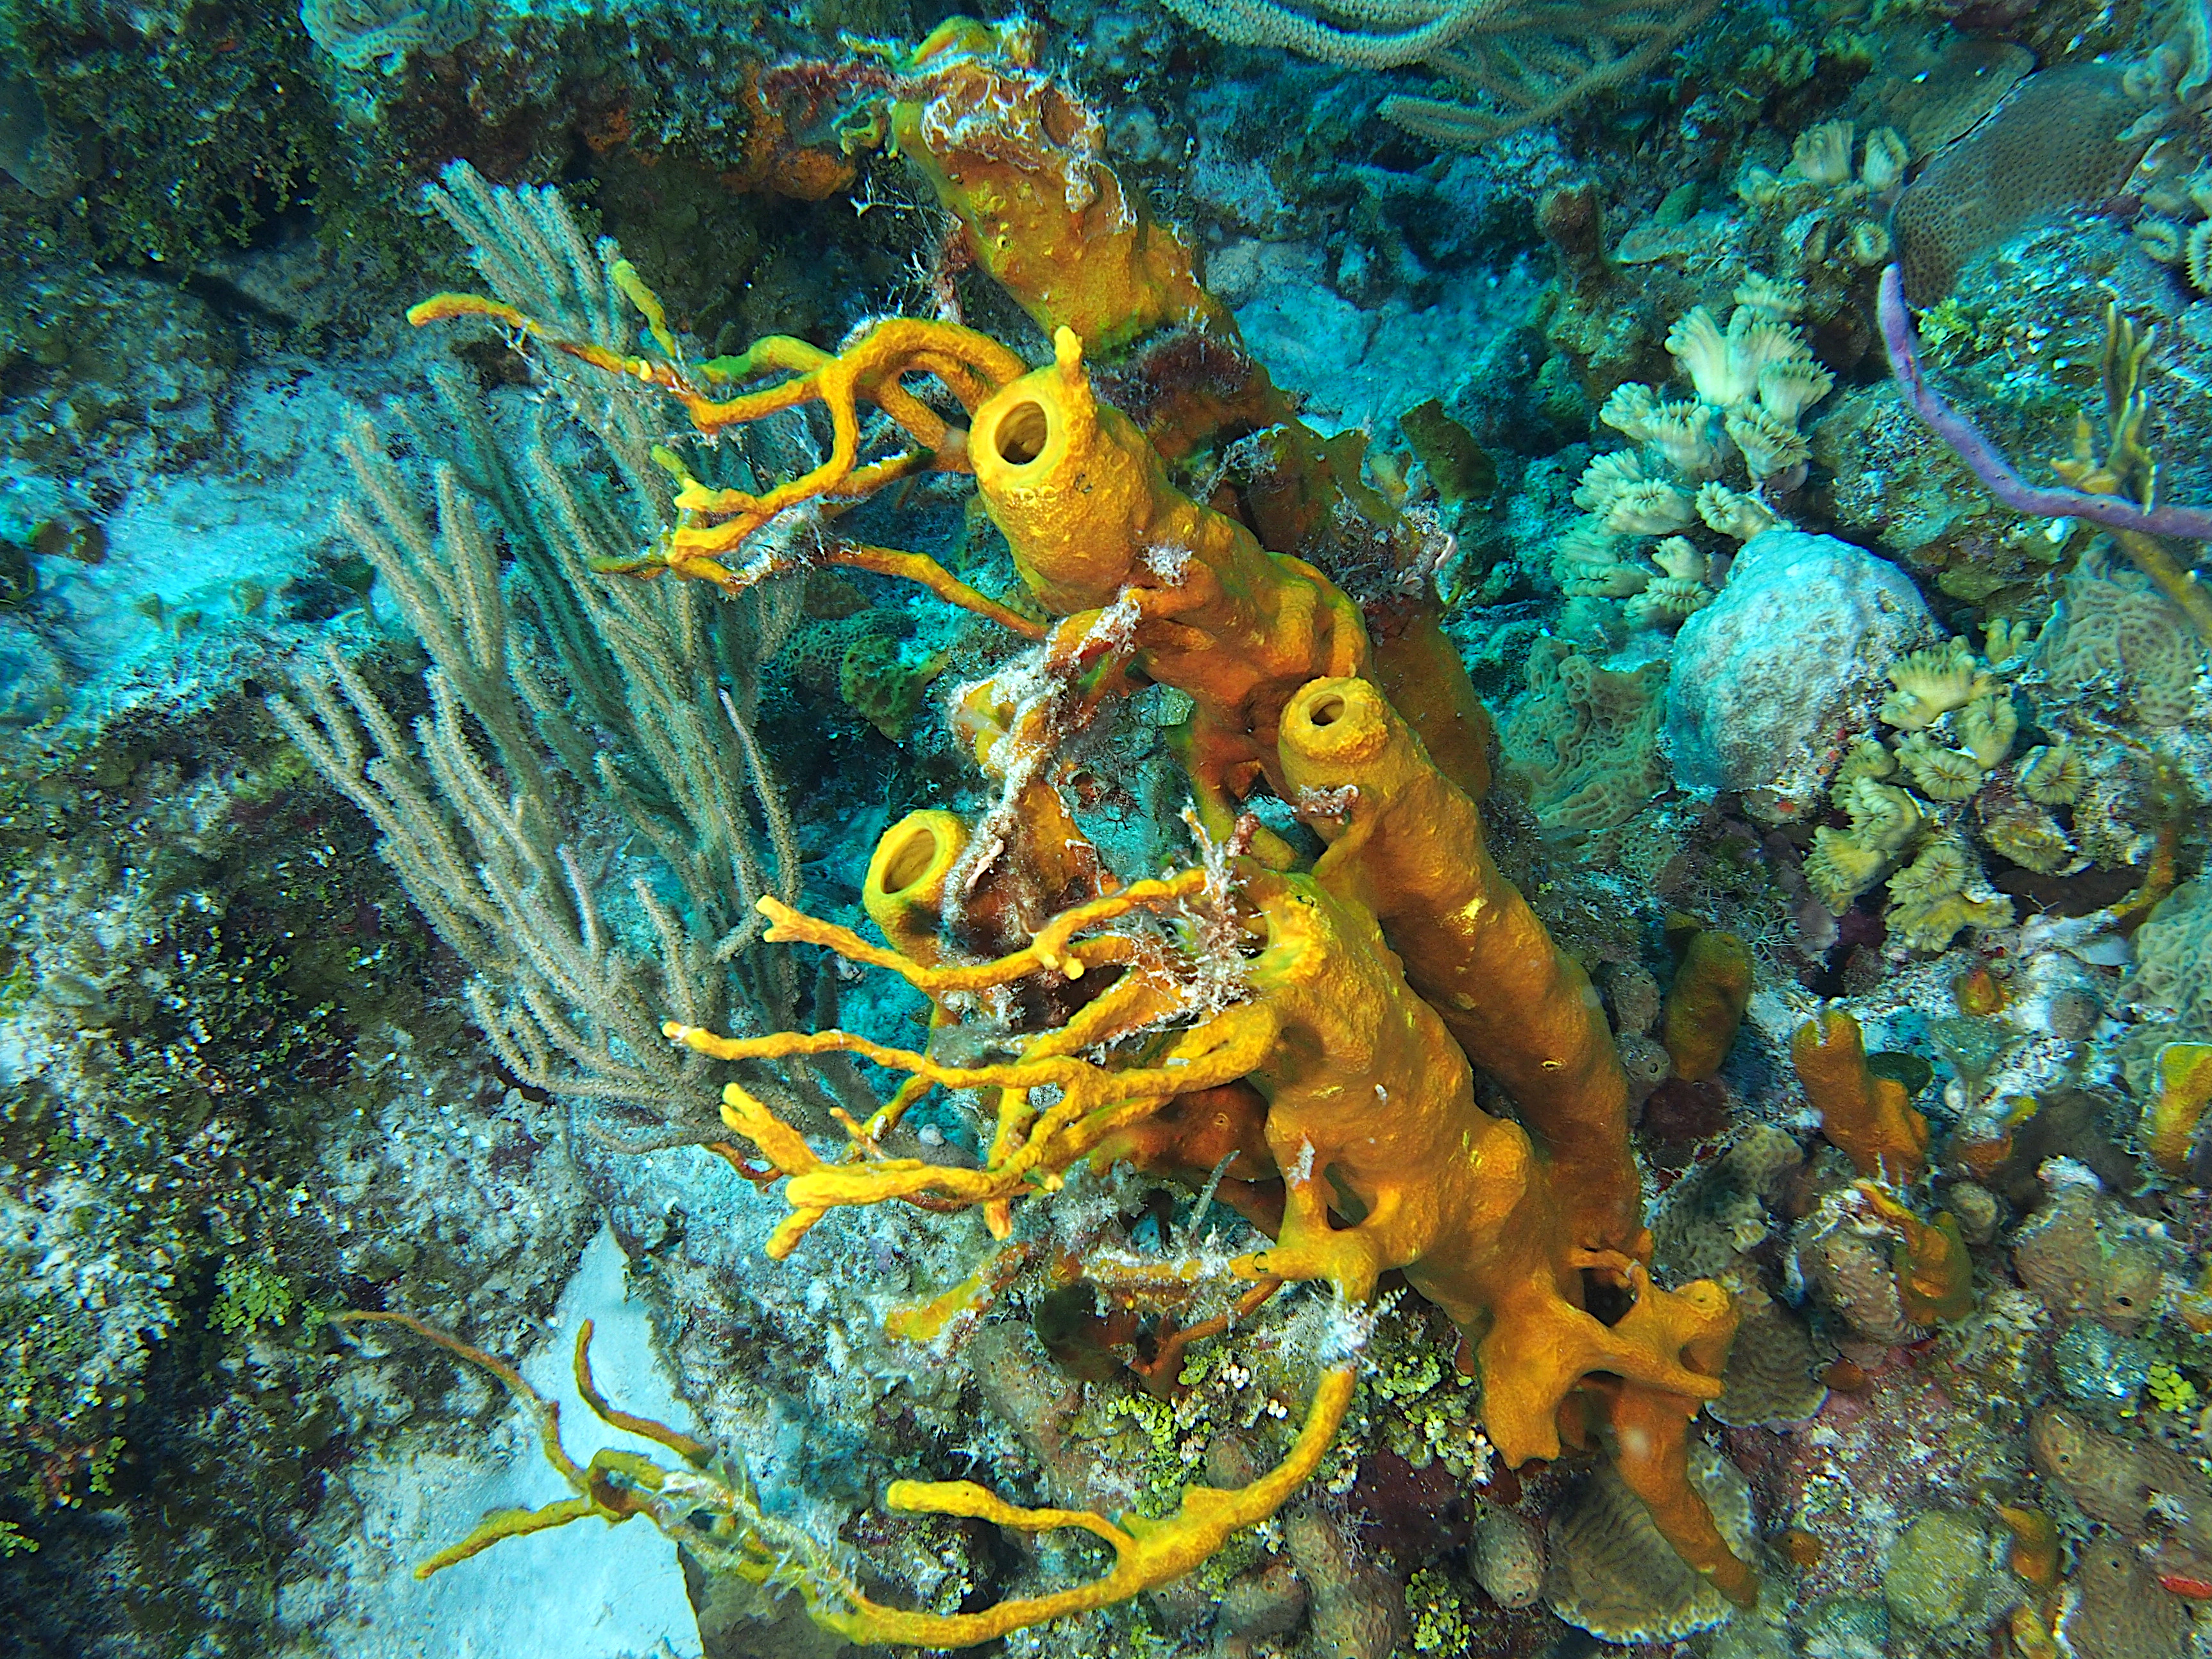 Branchlet Sponge - Aplysina insularis - Cozumel, Mexico